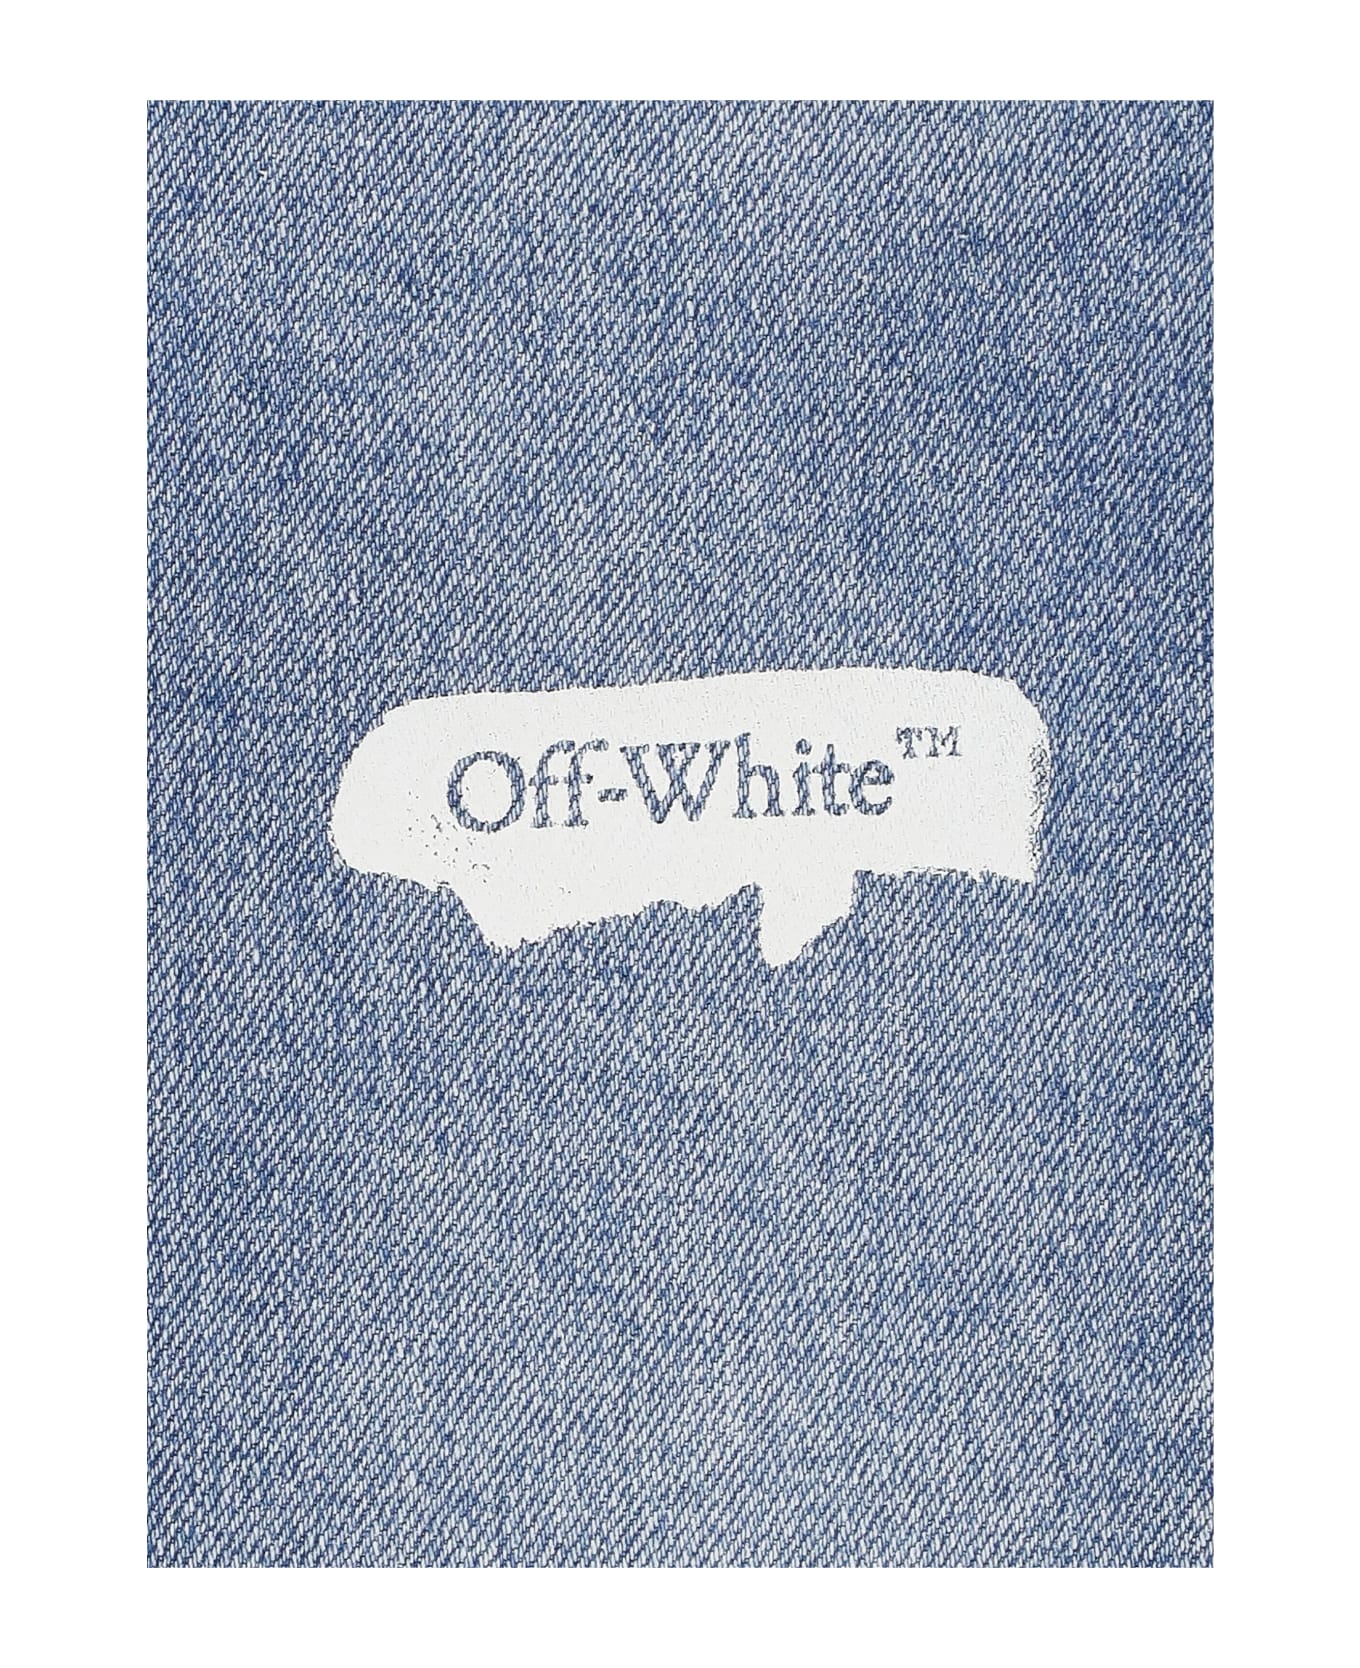 Off-White Cotton Jeans - Blue